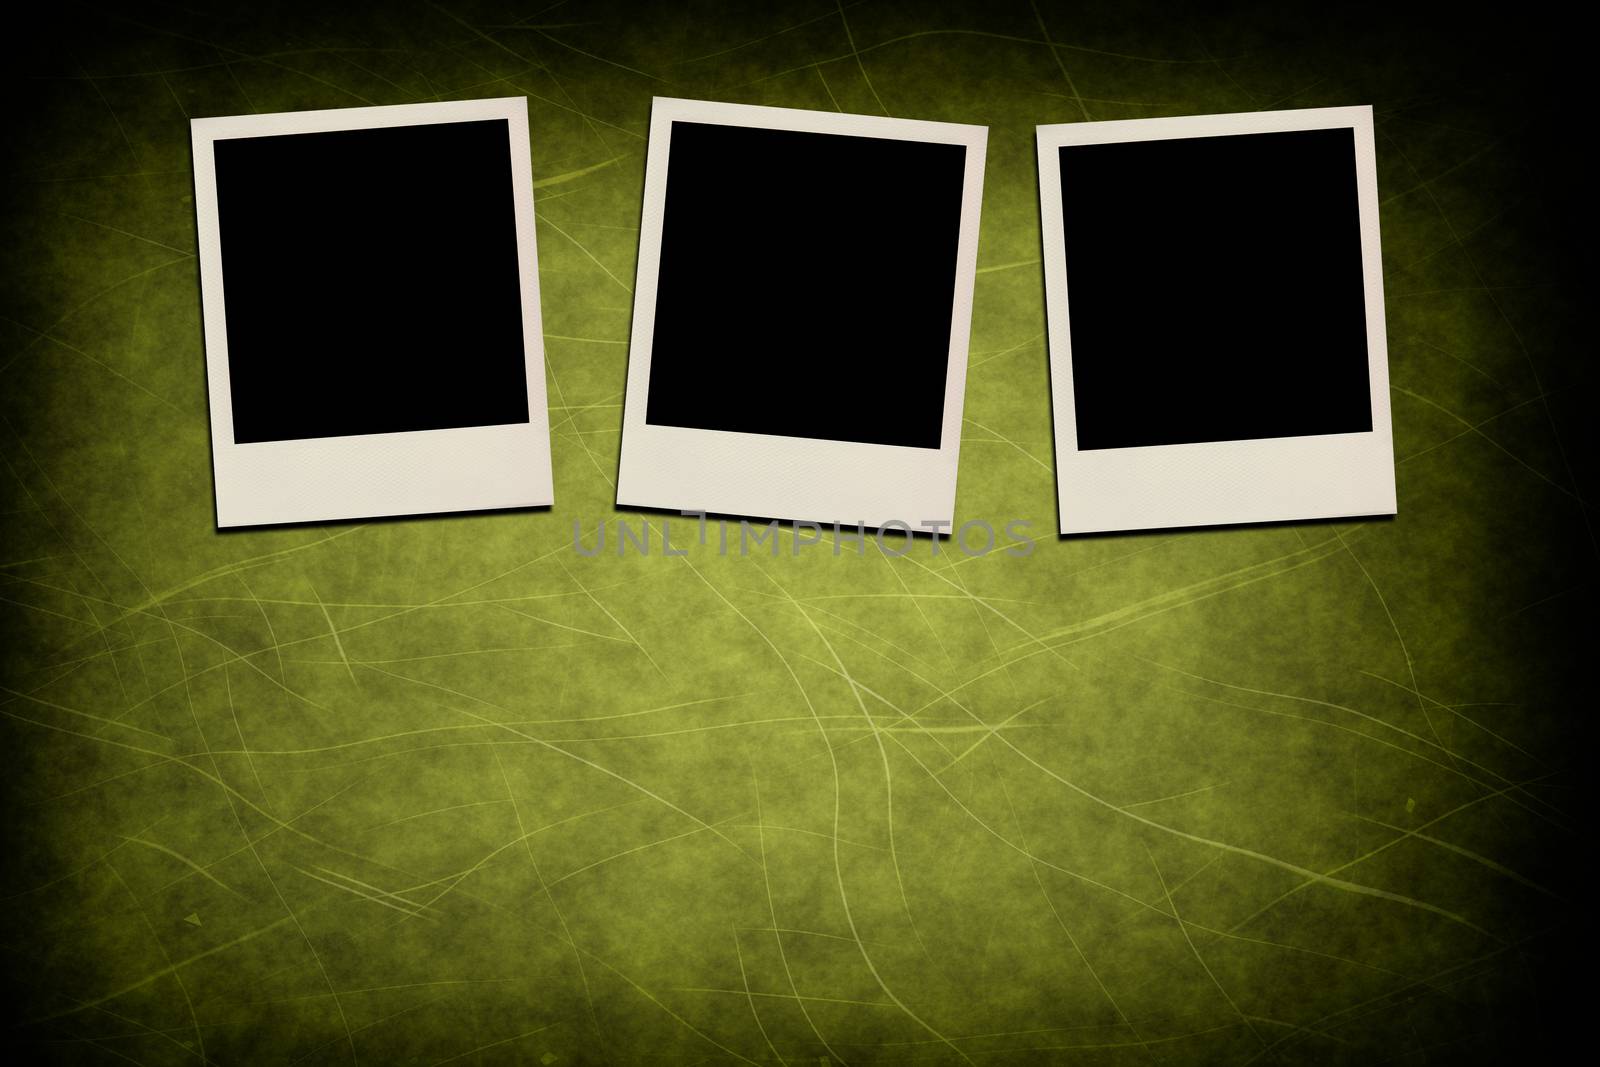 Blank instant photo frames on grunge green background by Attila